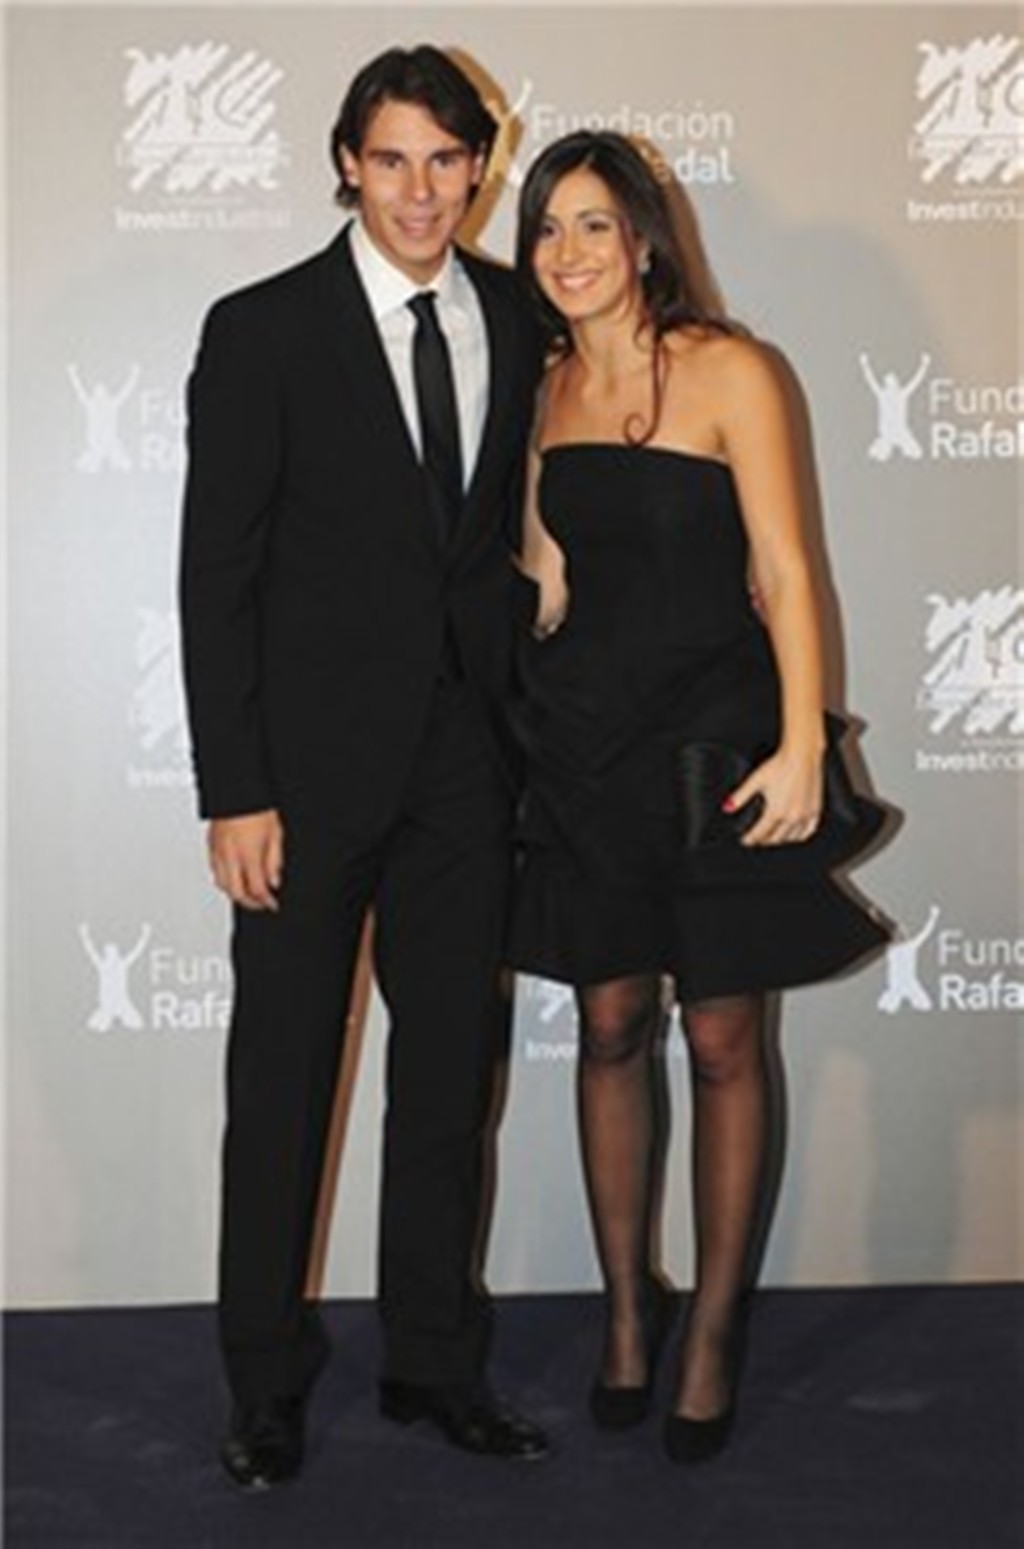 The new look of Xisca Perello, Rafael Nadal's girlfriend - Rafael Nadal Photo ...1024 x 1549